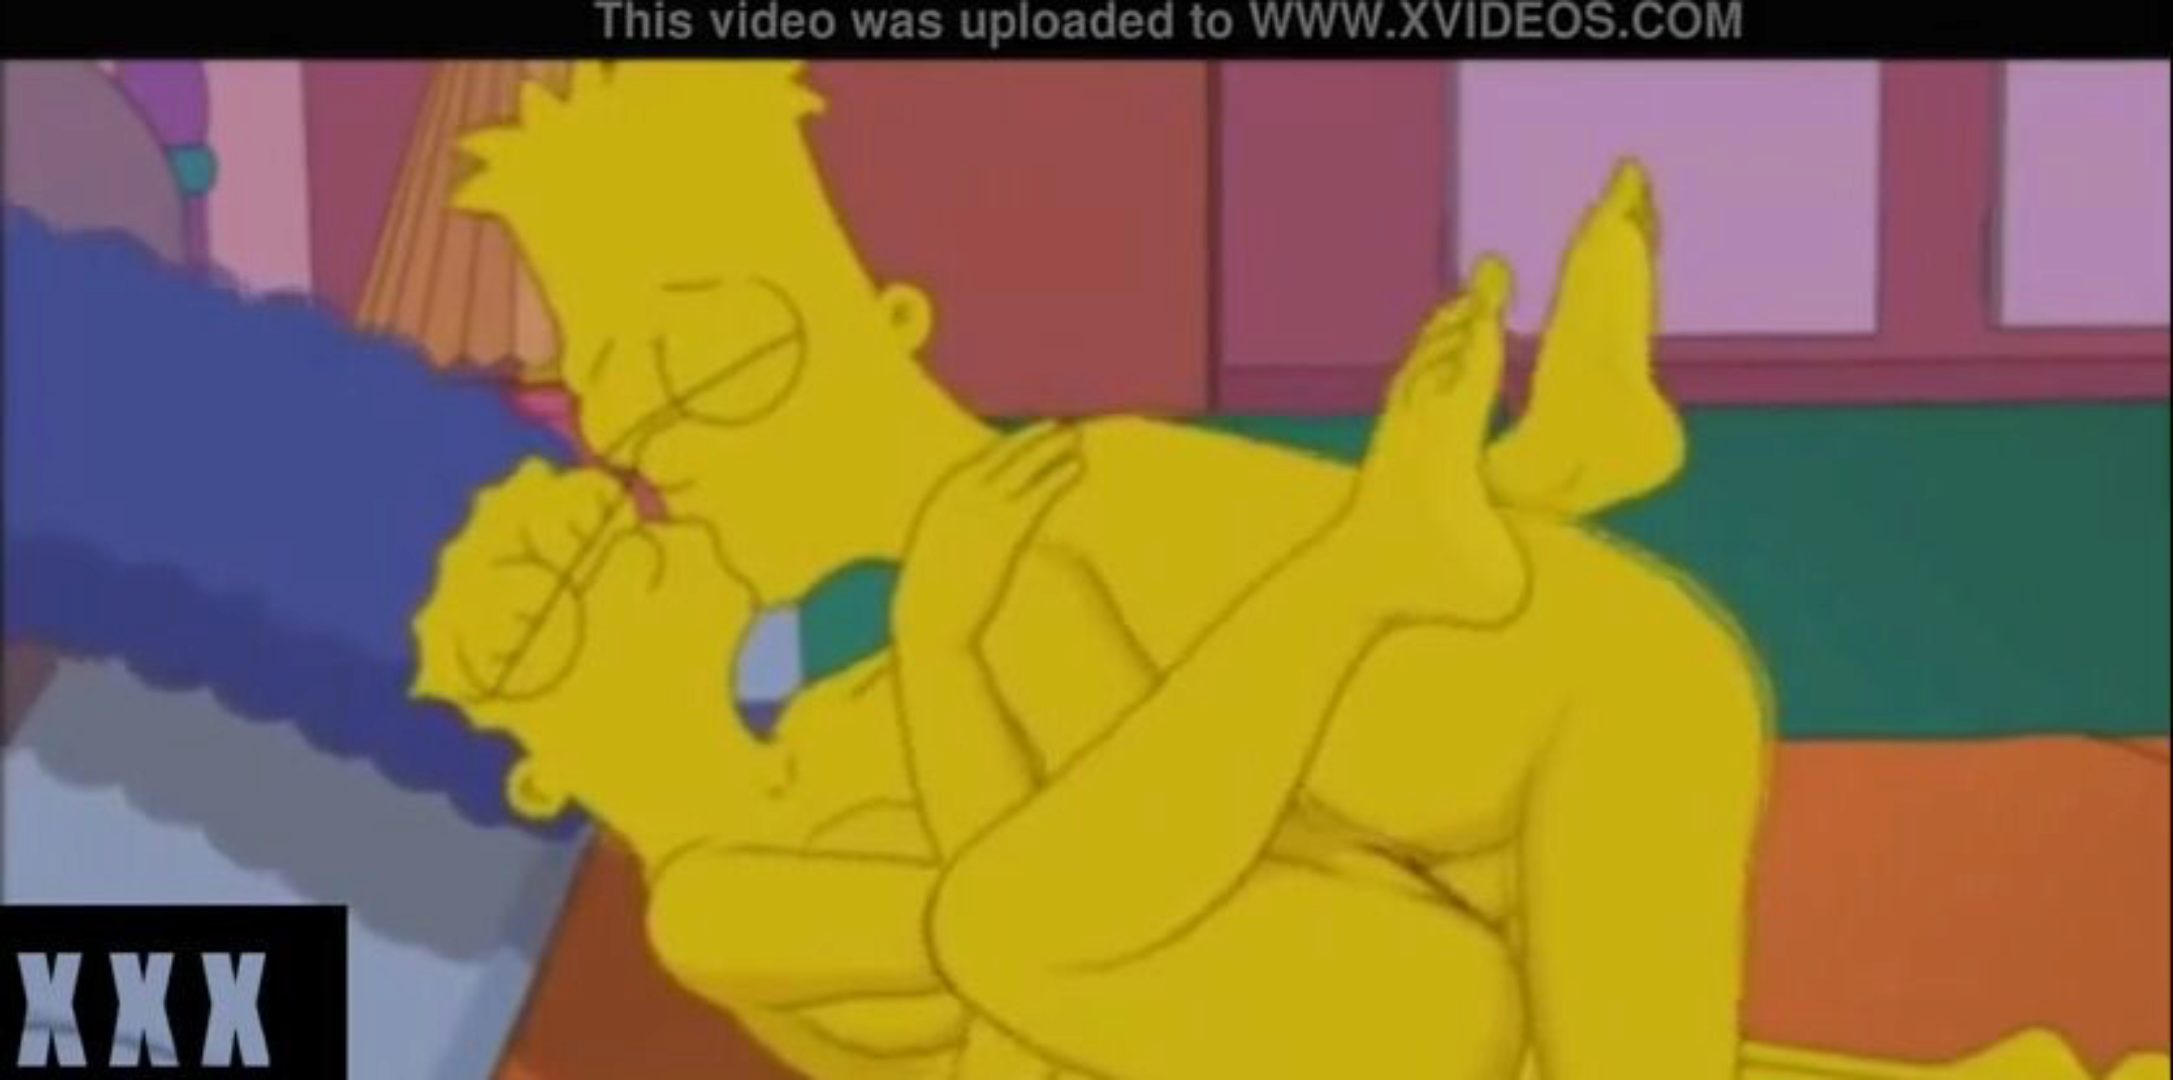 Simpsons nackt beim sex